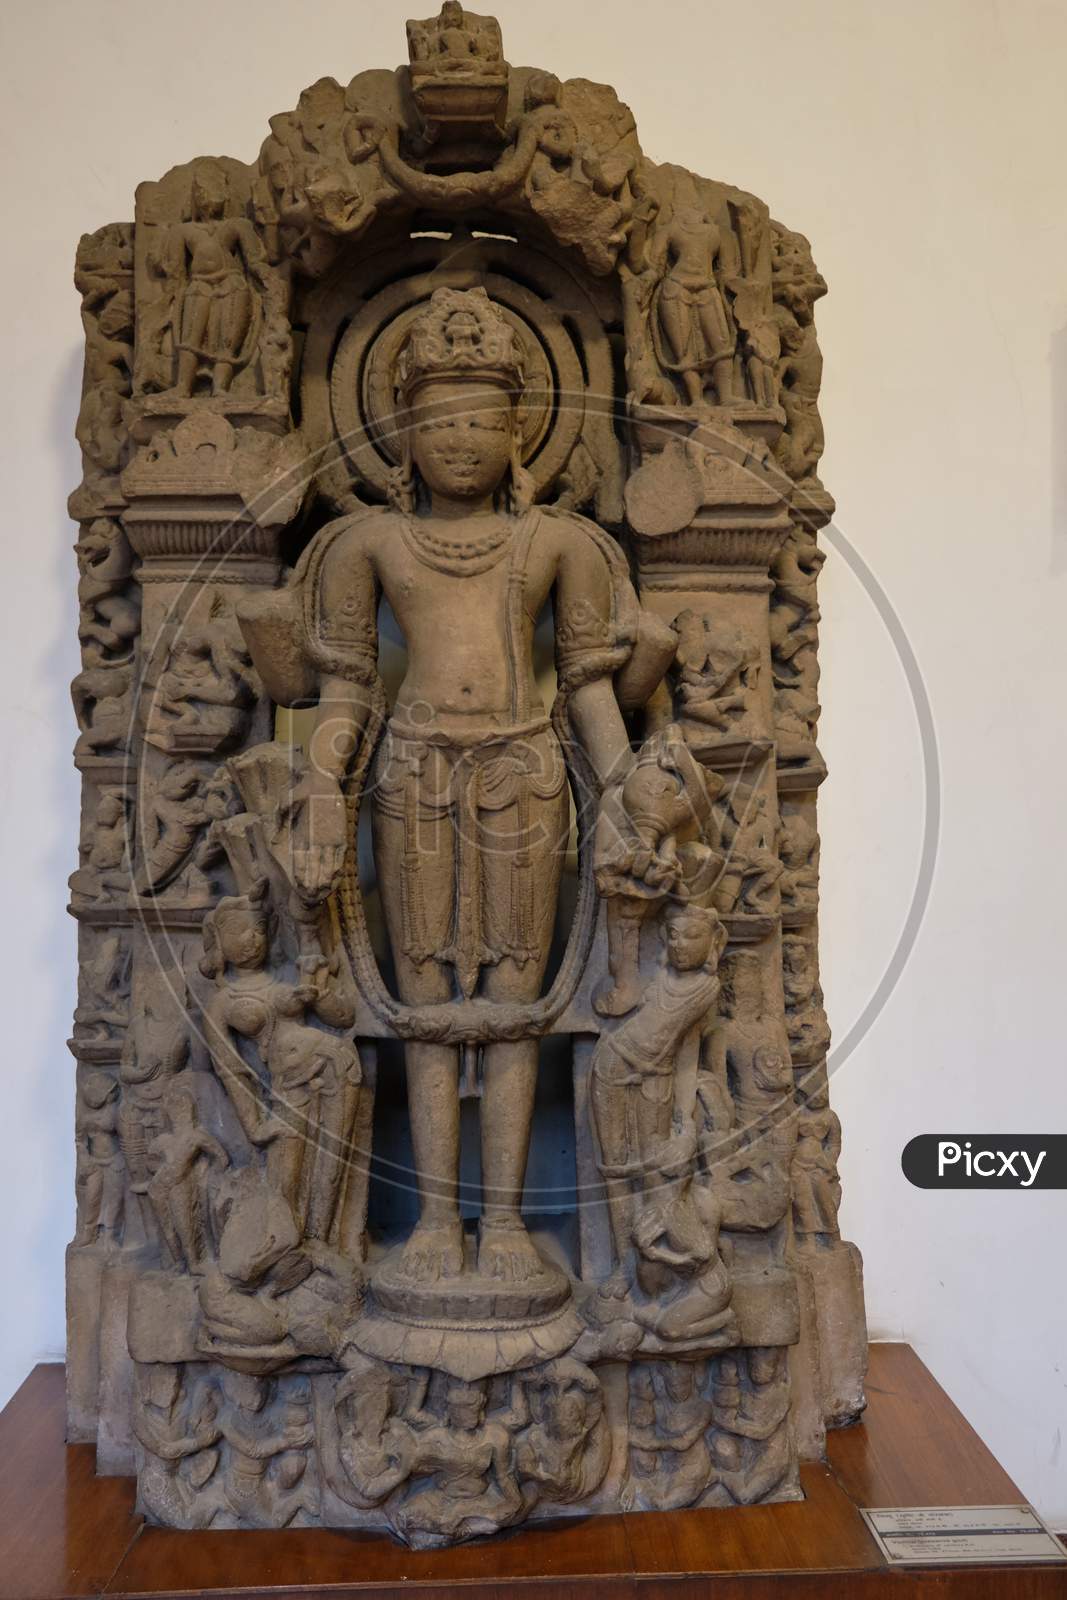 Stone Relief Of Hindu God Vishnu In The National Museum Of India In New Delhi